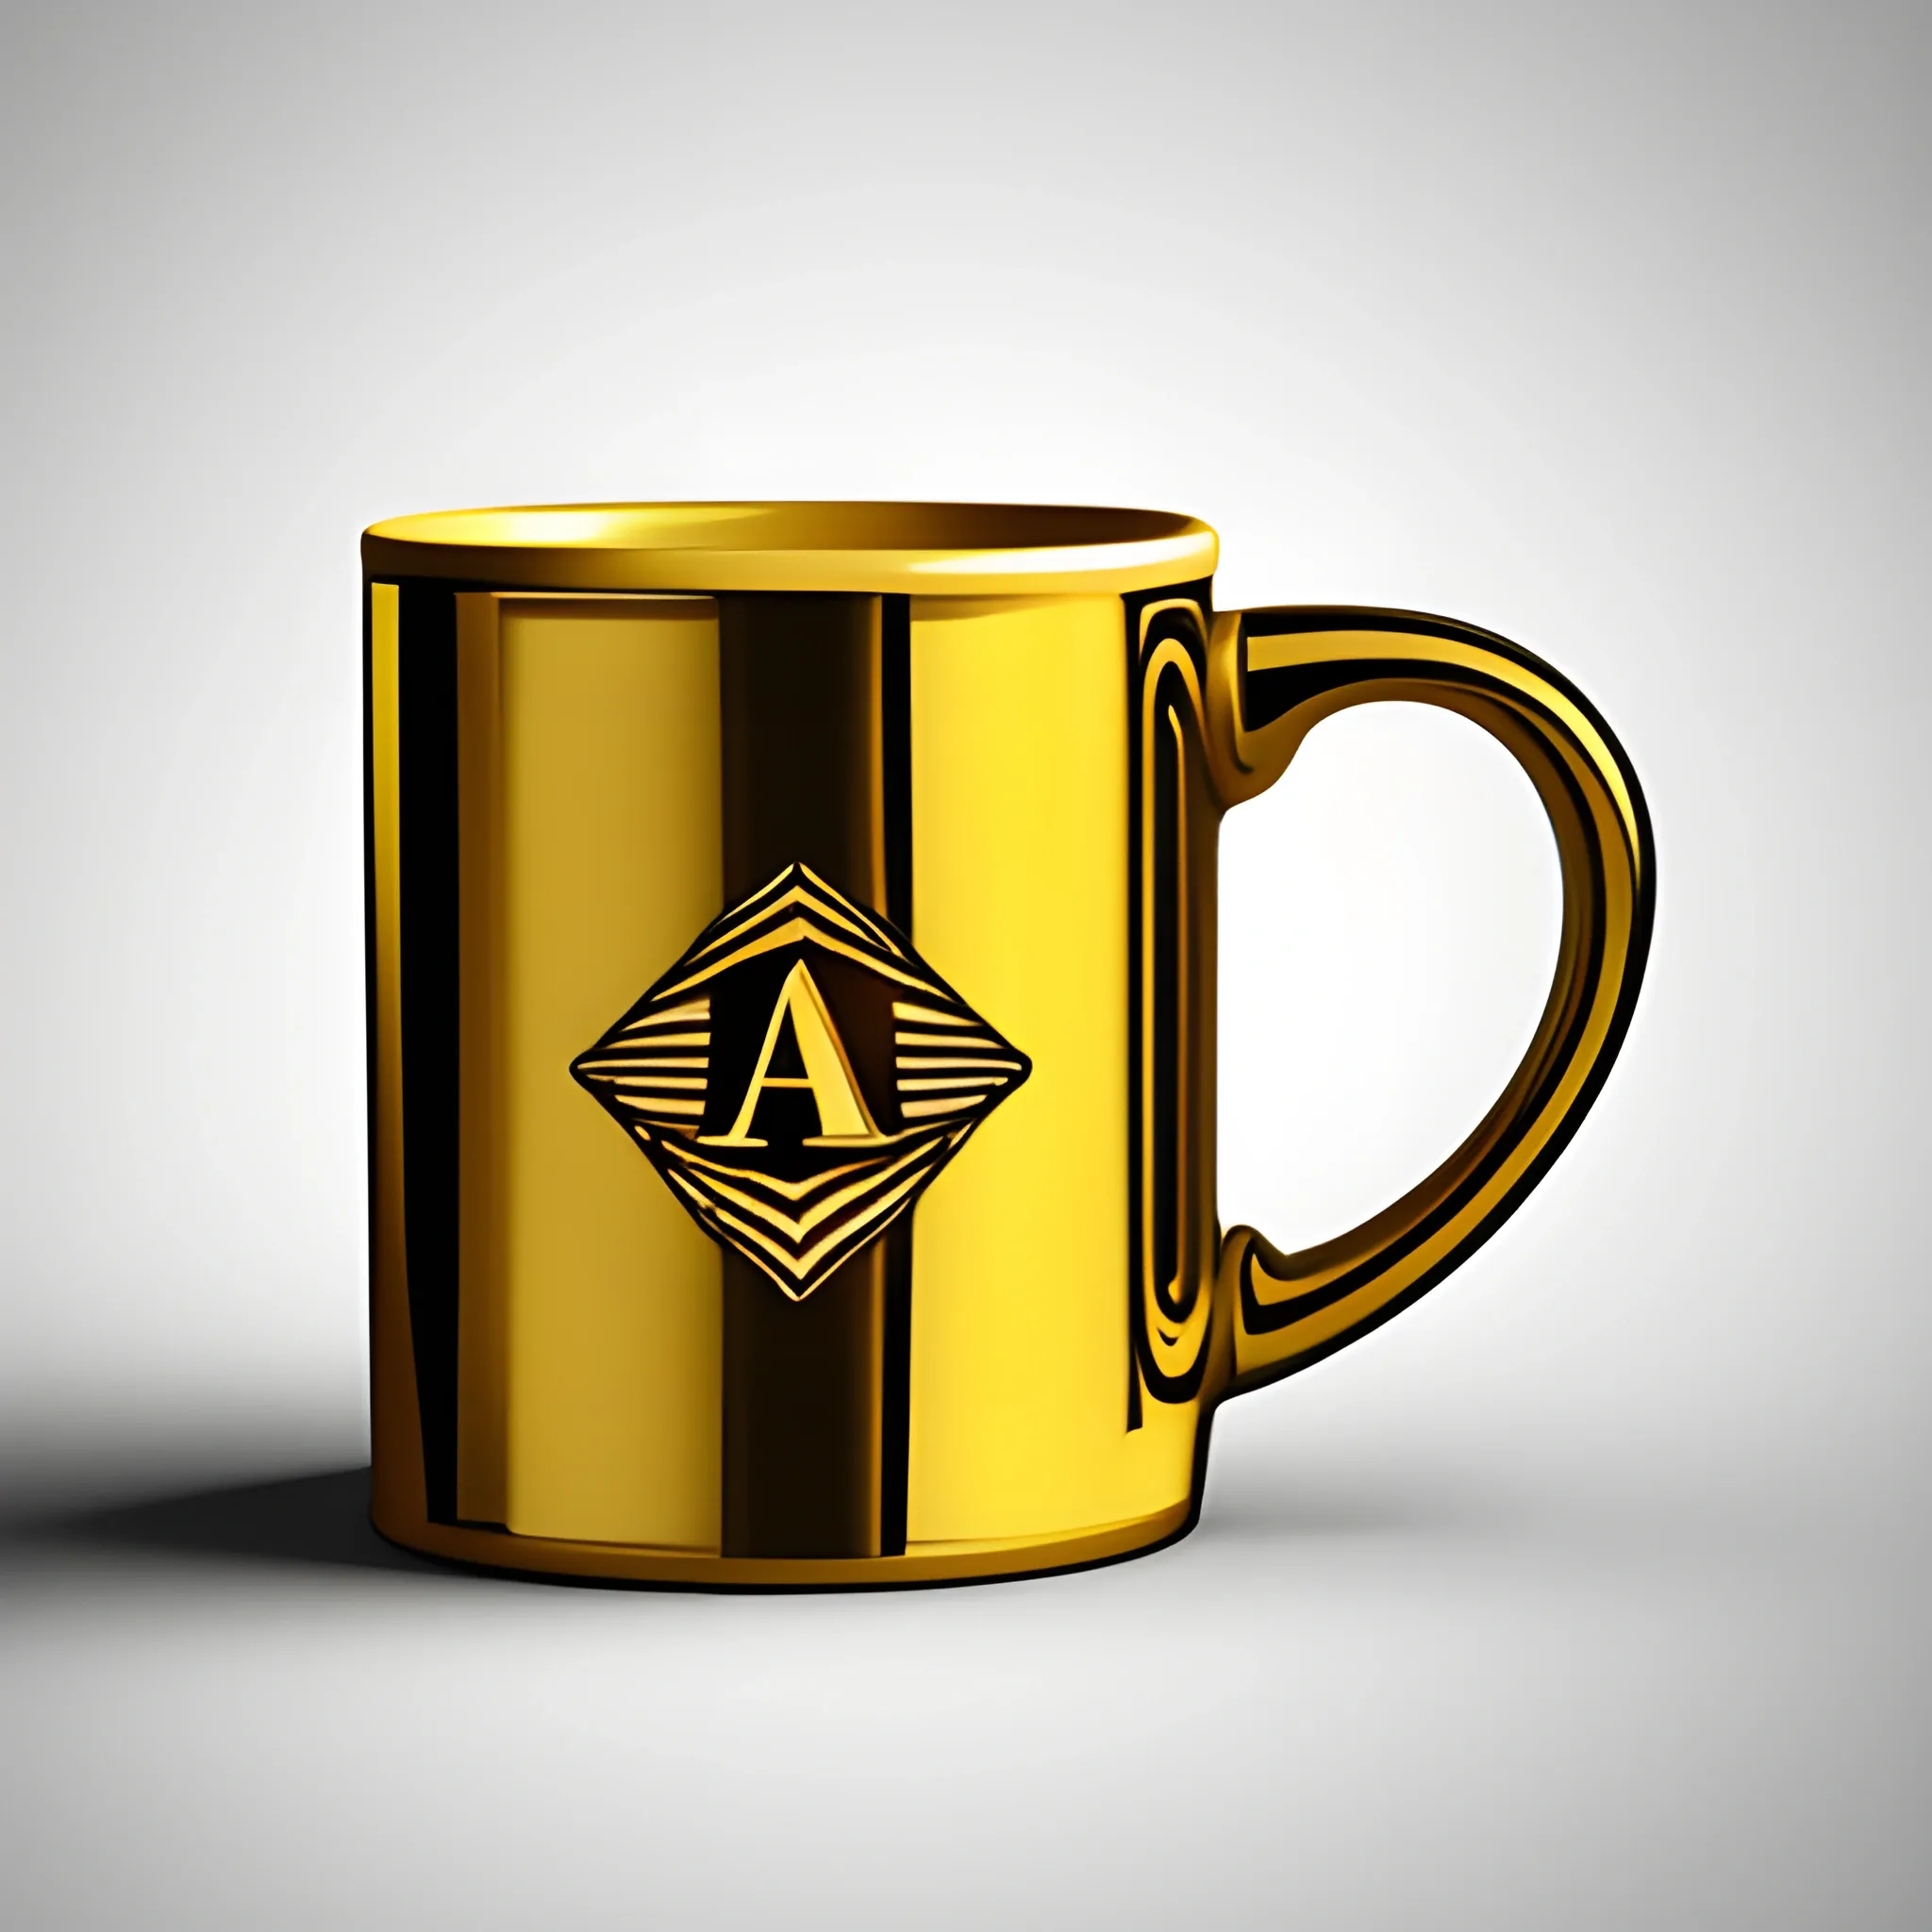 golden metallic line art logo with the word "Artimah" representing a Mug
, Cartoon